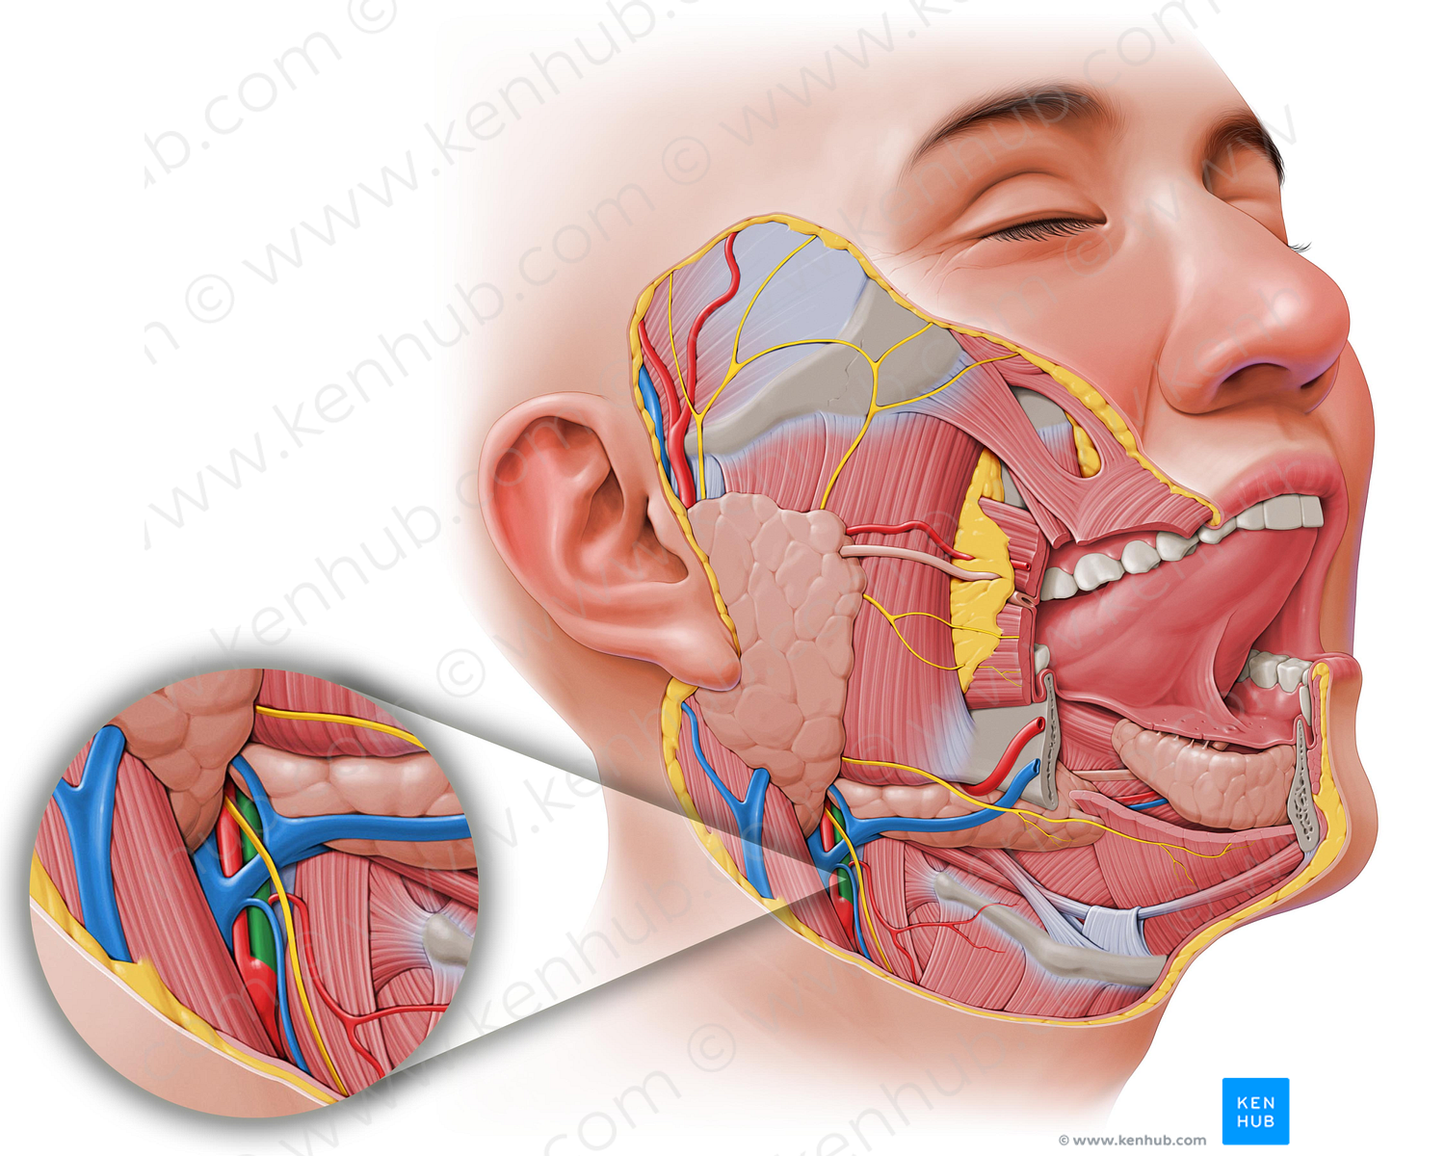 External carotid artery (#967)